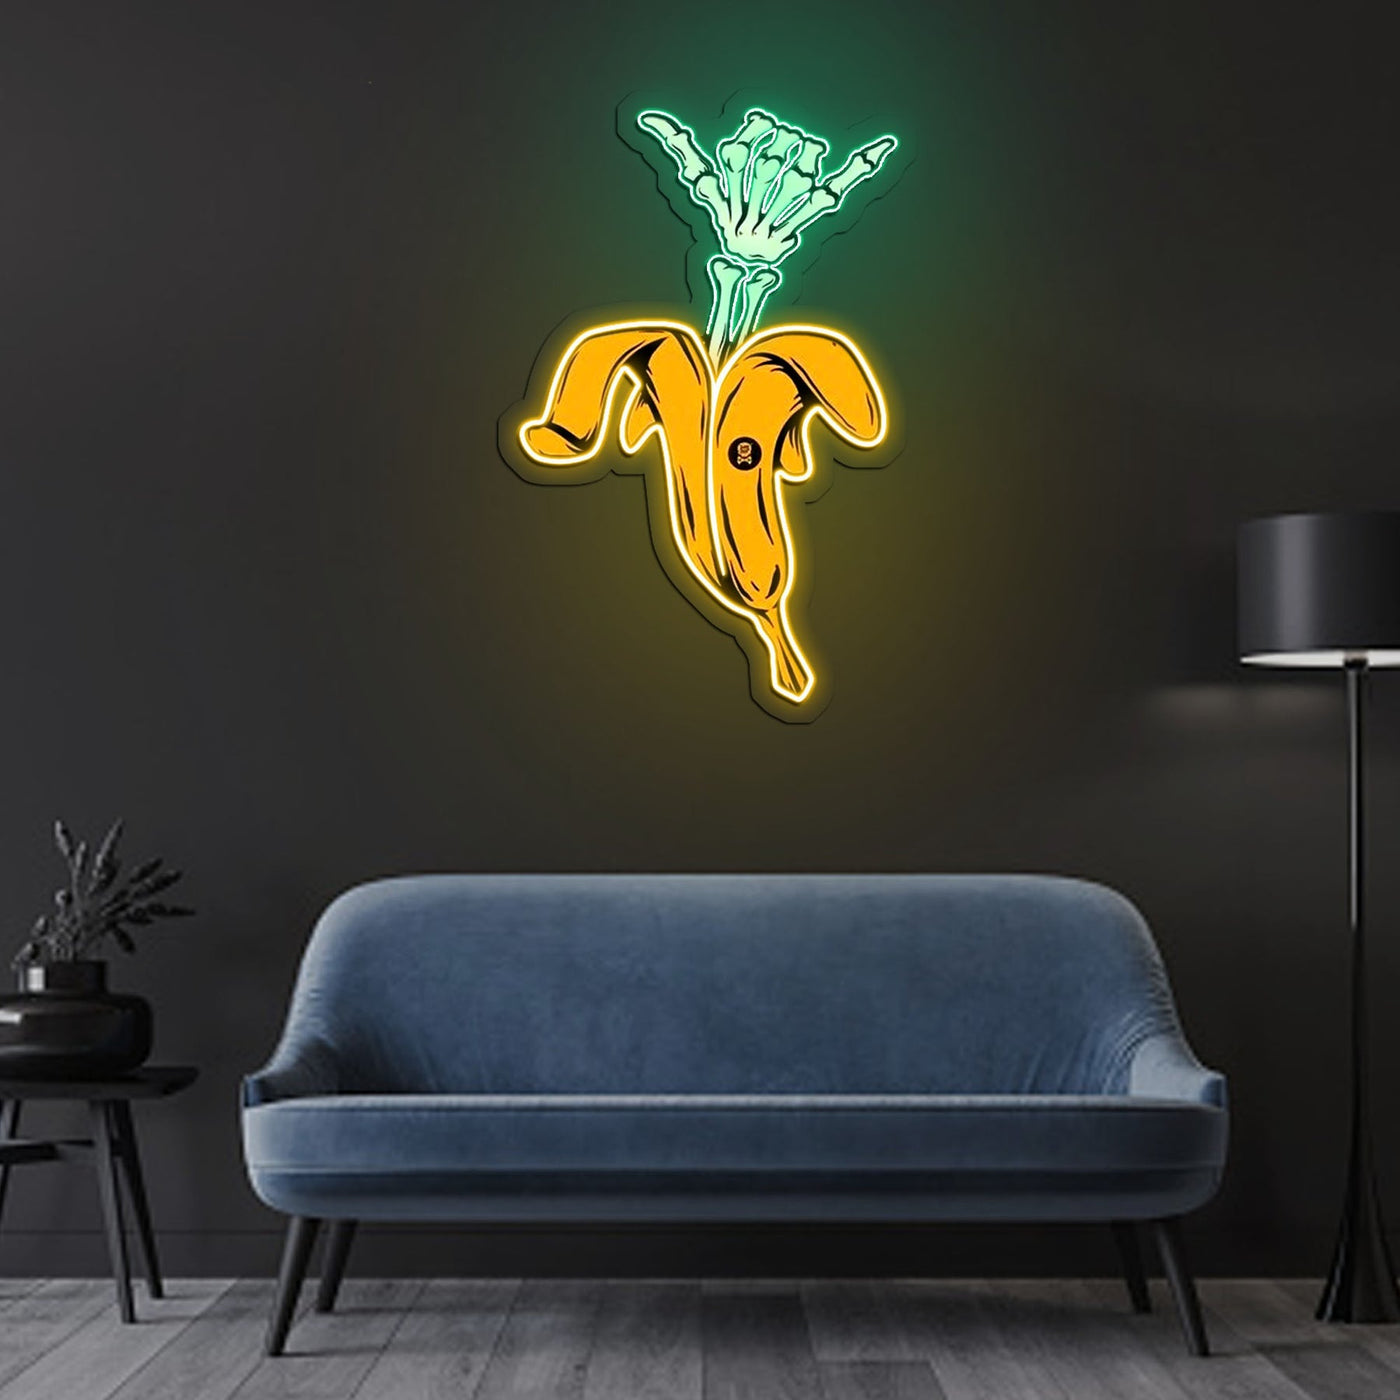 Cool Banana Neon Sign x Acrylic Artwork - 2ftLED Neon x Acrylic Print